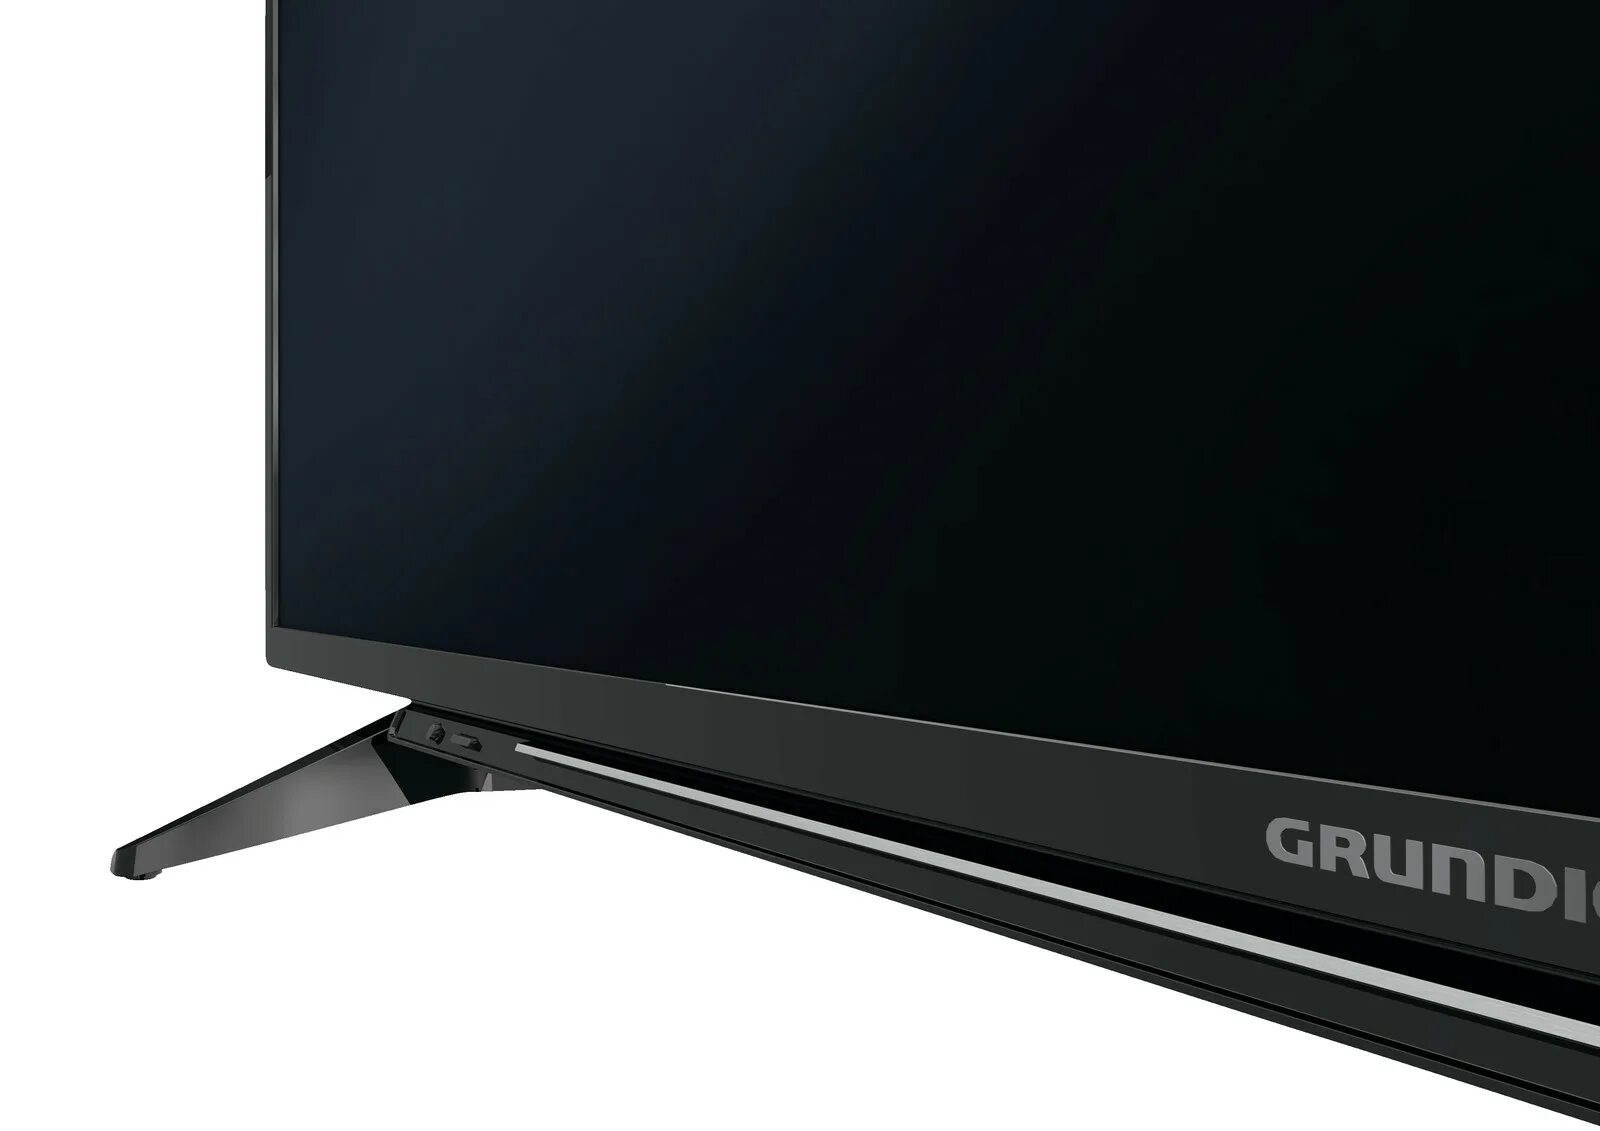 Grundig телевизор купить. Телевизор Grundig 32gfb6820 32" (2018). Телевизор Grundig 43. Телевизор Грюндик 65. Телевизор Grundig 40gus8860 40" (2018).